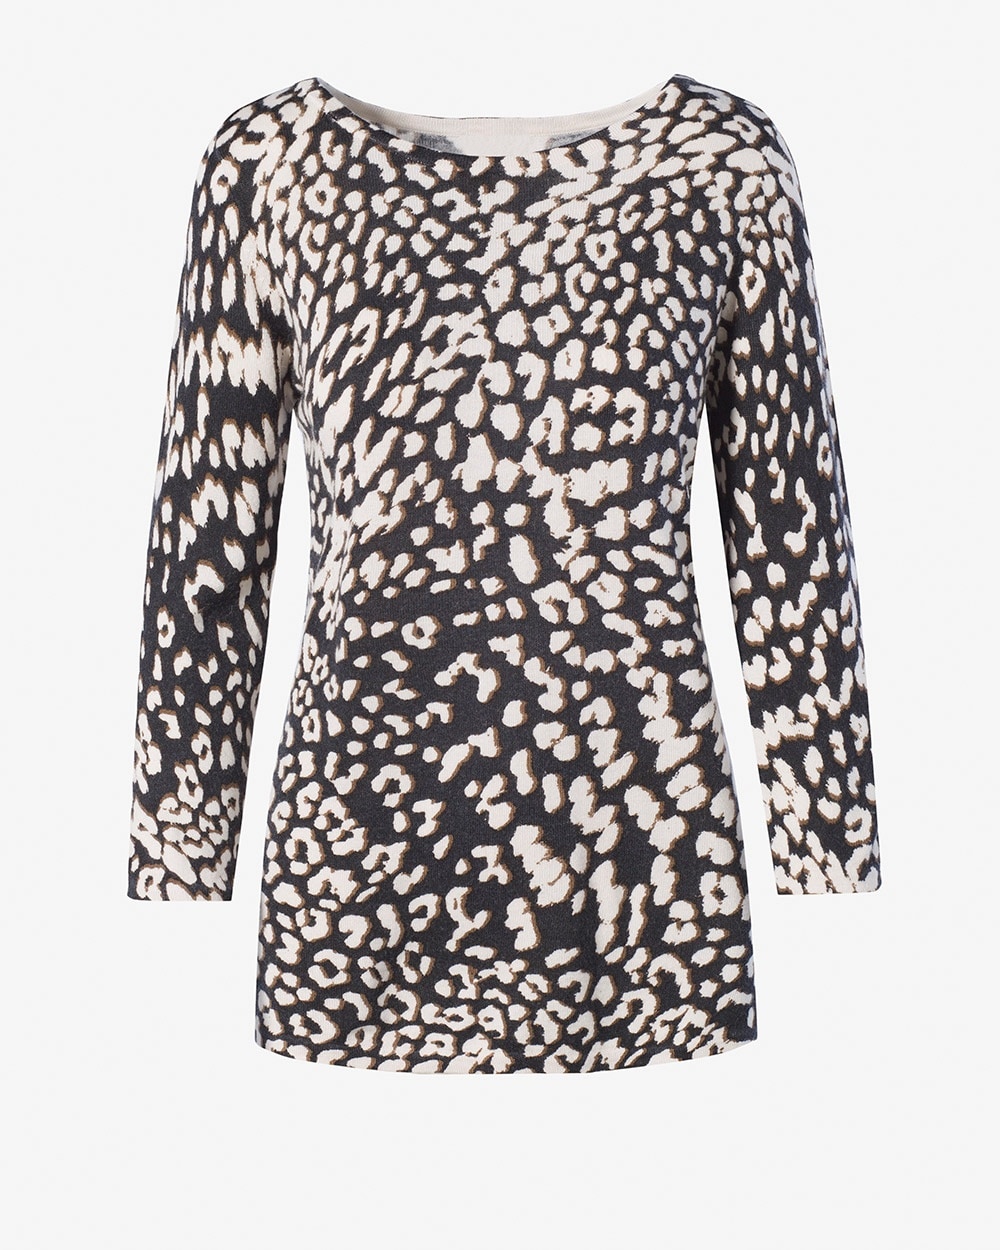 Touch of Cashmere Graphic Leopard Spots Glenda Tulip Hem Pullover